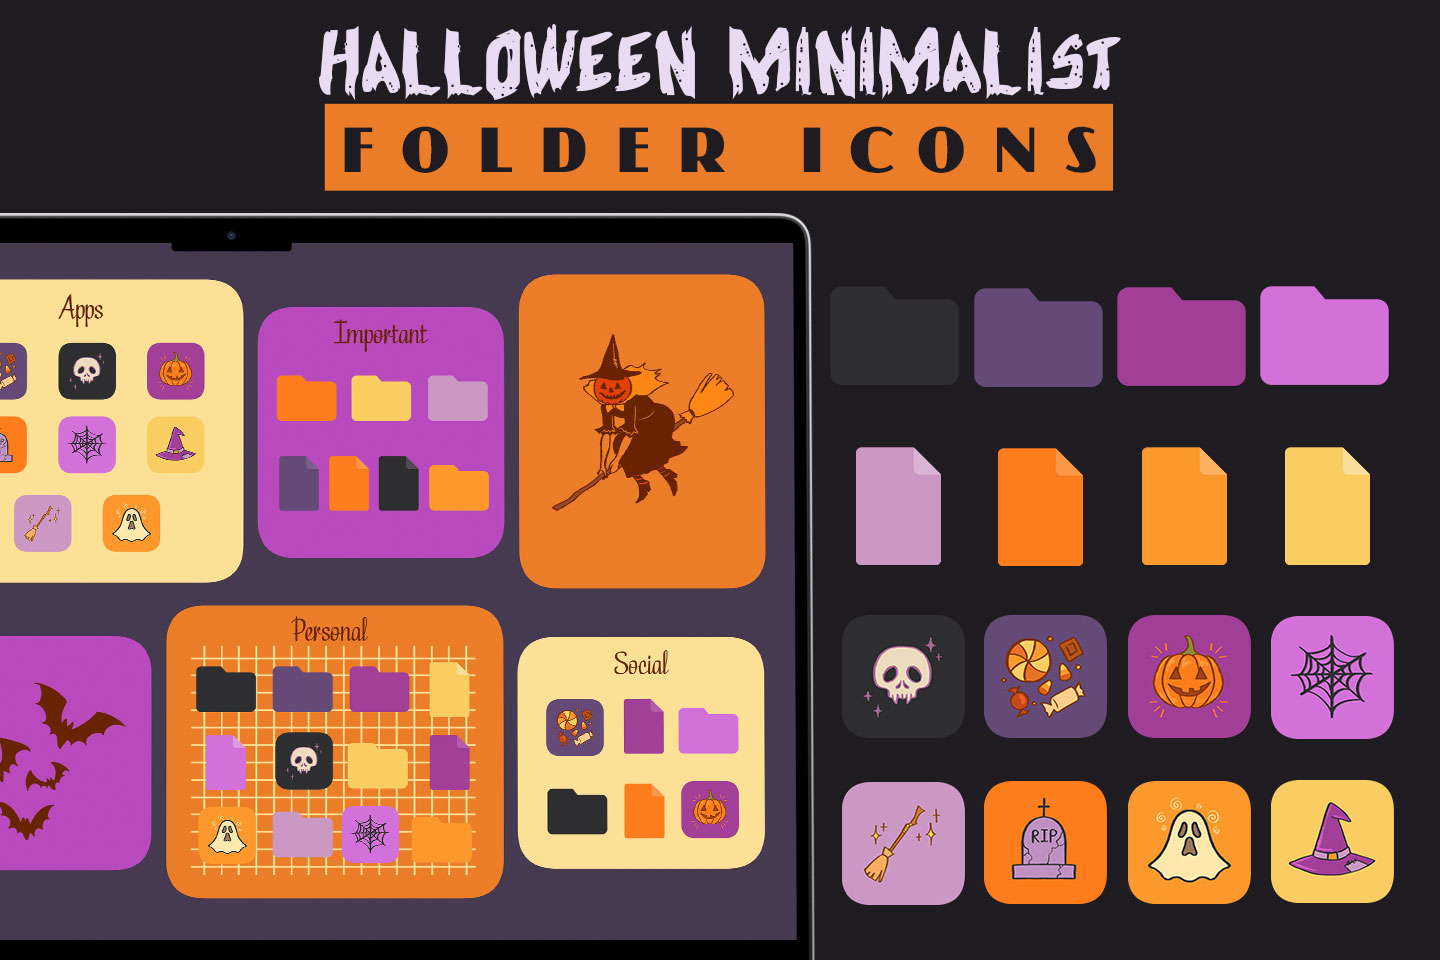 Pack d’icônes de dossier minimaliste d’Halloween